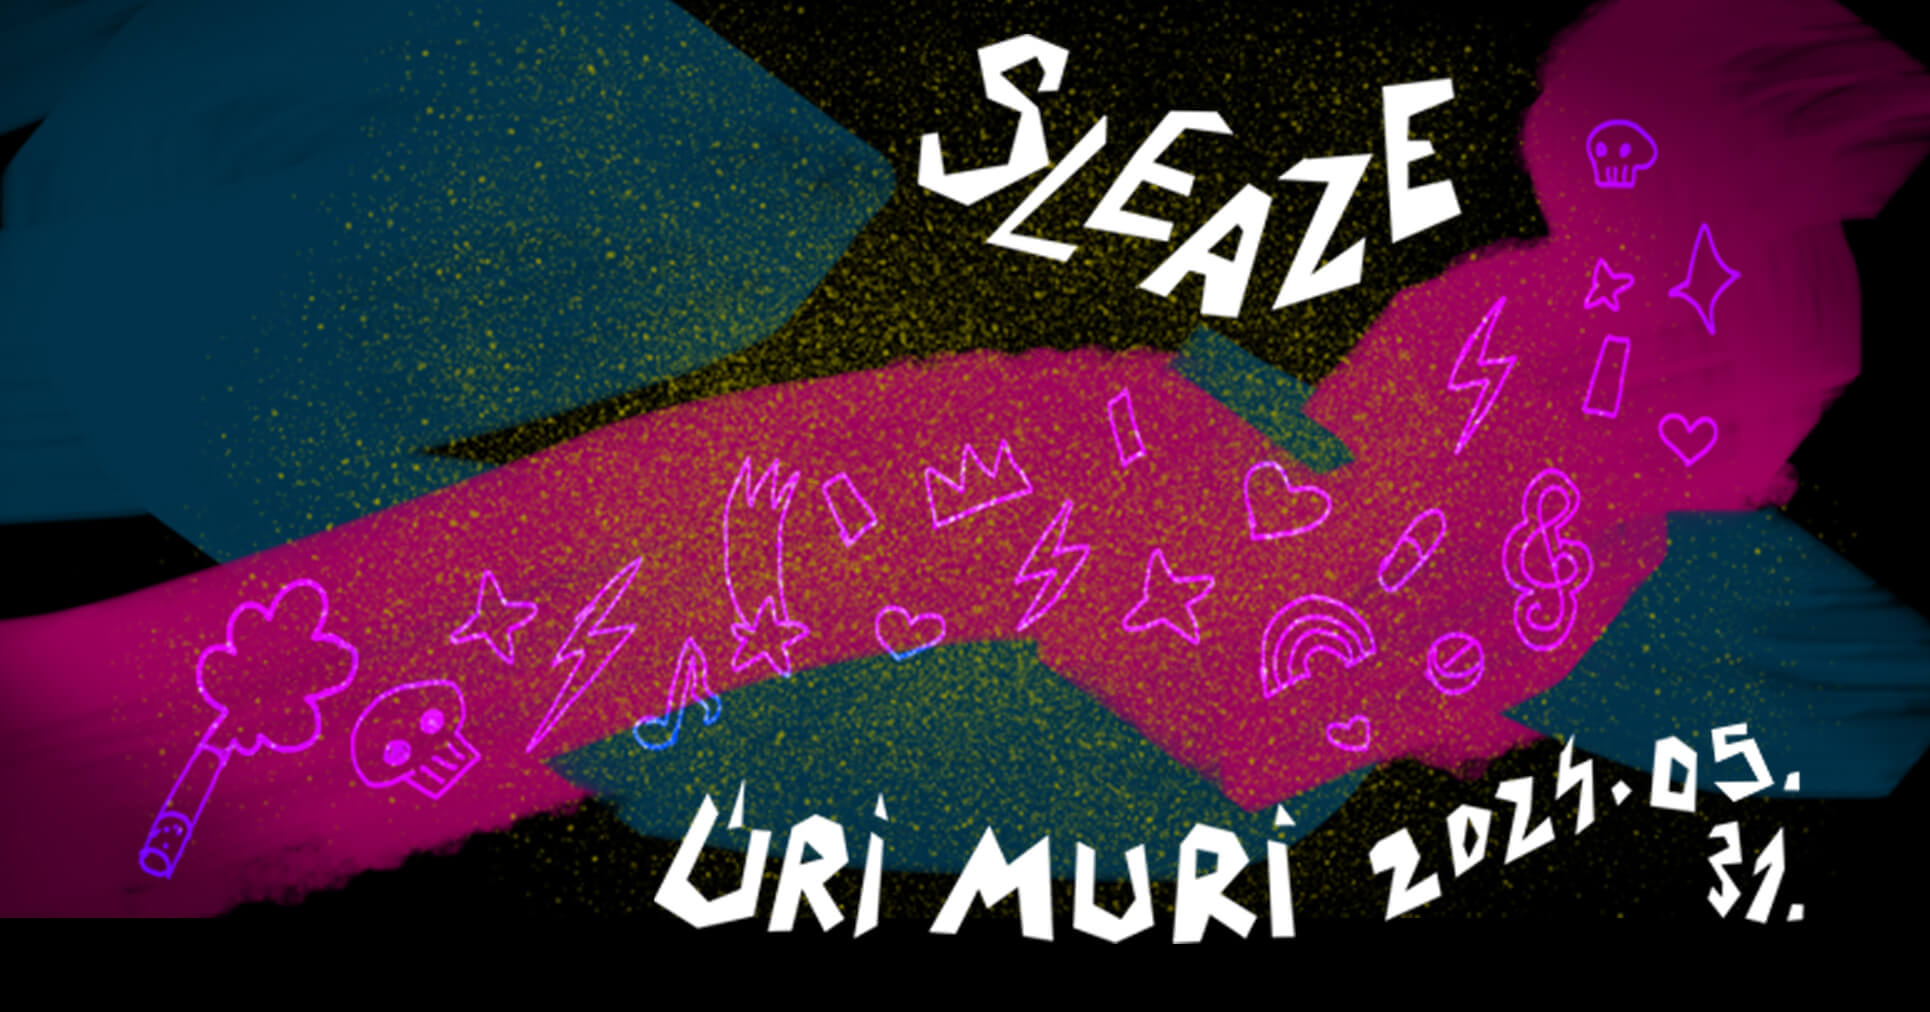 Sleaze Concert, Úri Muri Budapest, 31 May